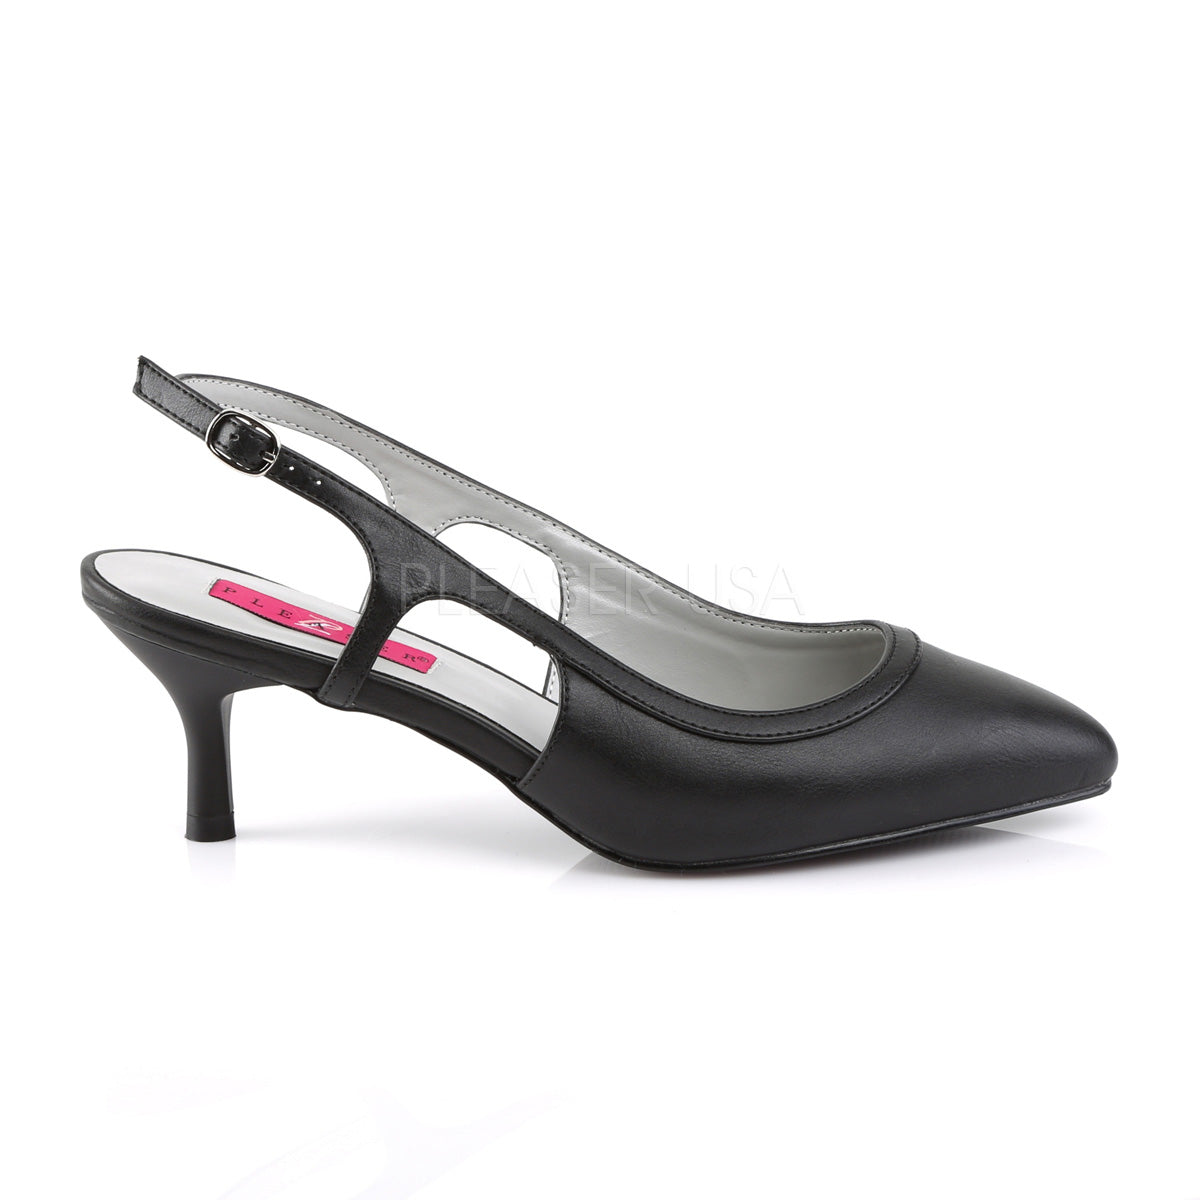 2.5 inch heels black